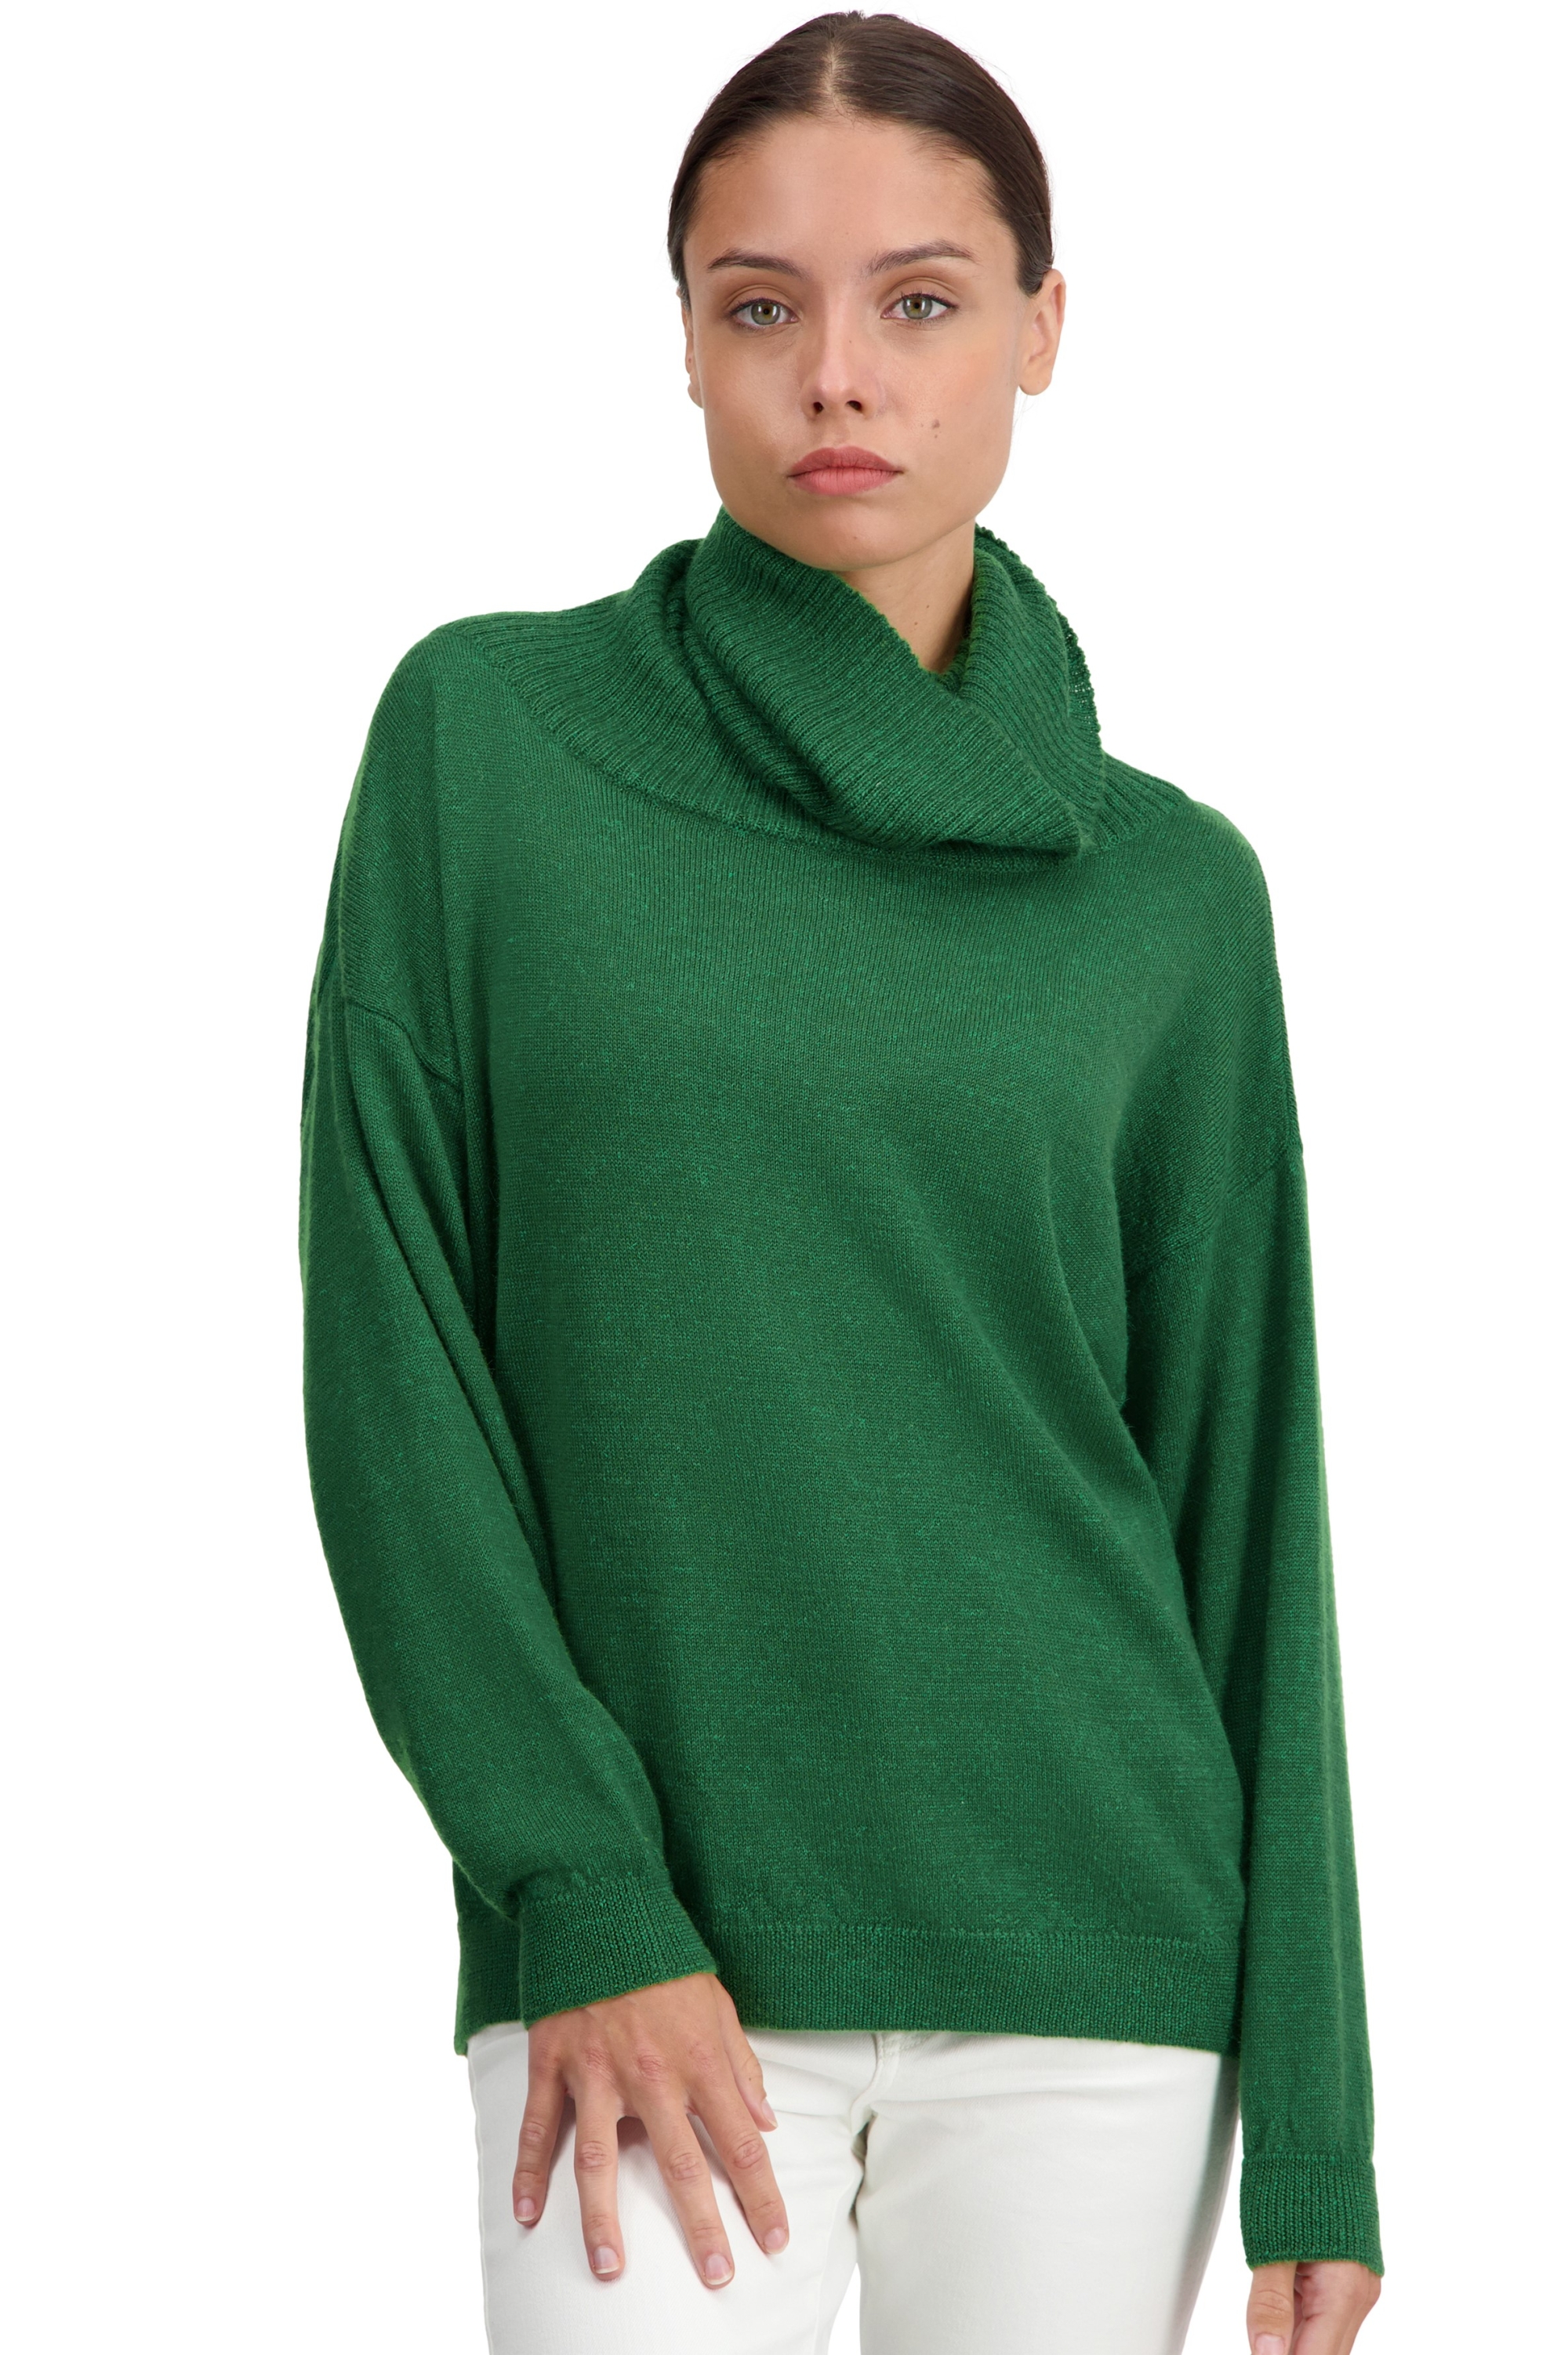 Baby Alpakawolle kaschmir pullover damen tanis green leaf xs